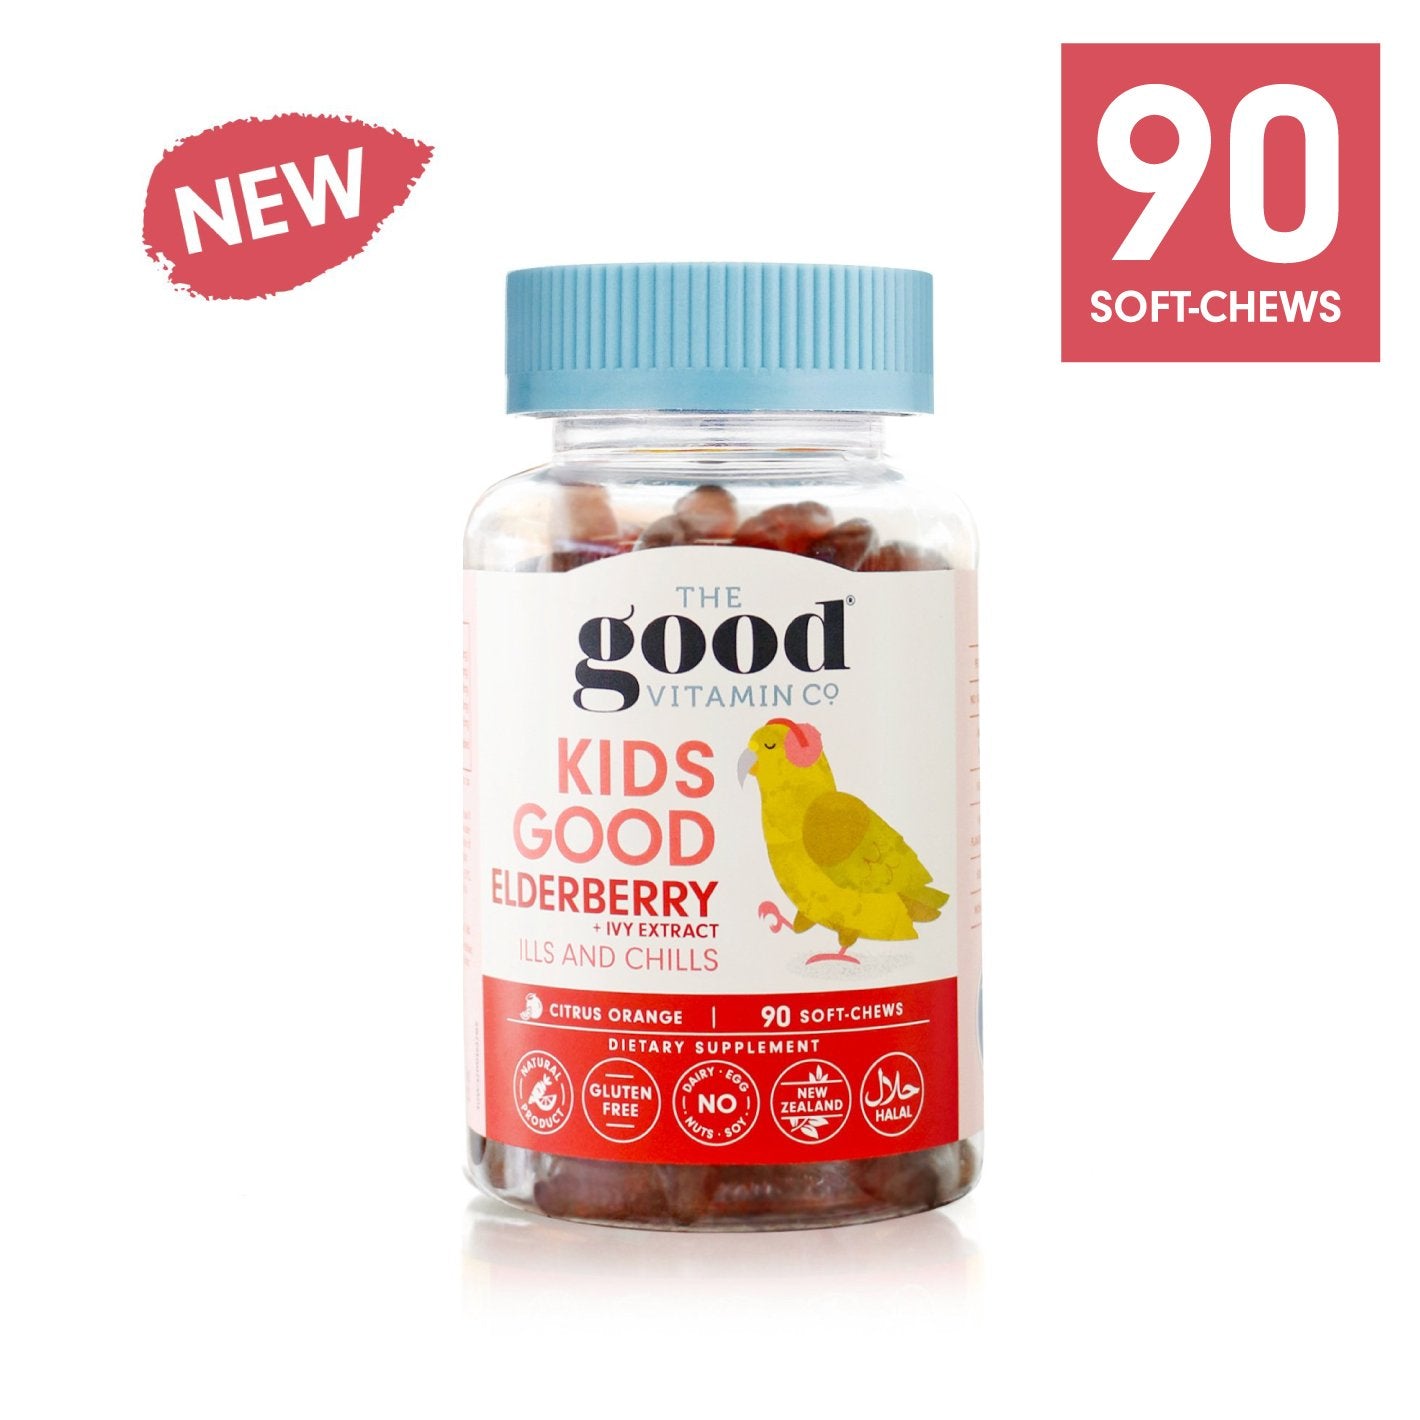 The Good Vitamin Co. Kids Good Elderberry + Ivy Extract 90 Soft Chews